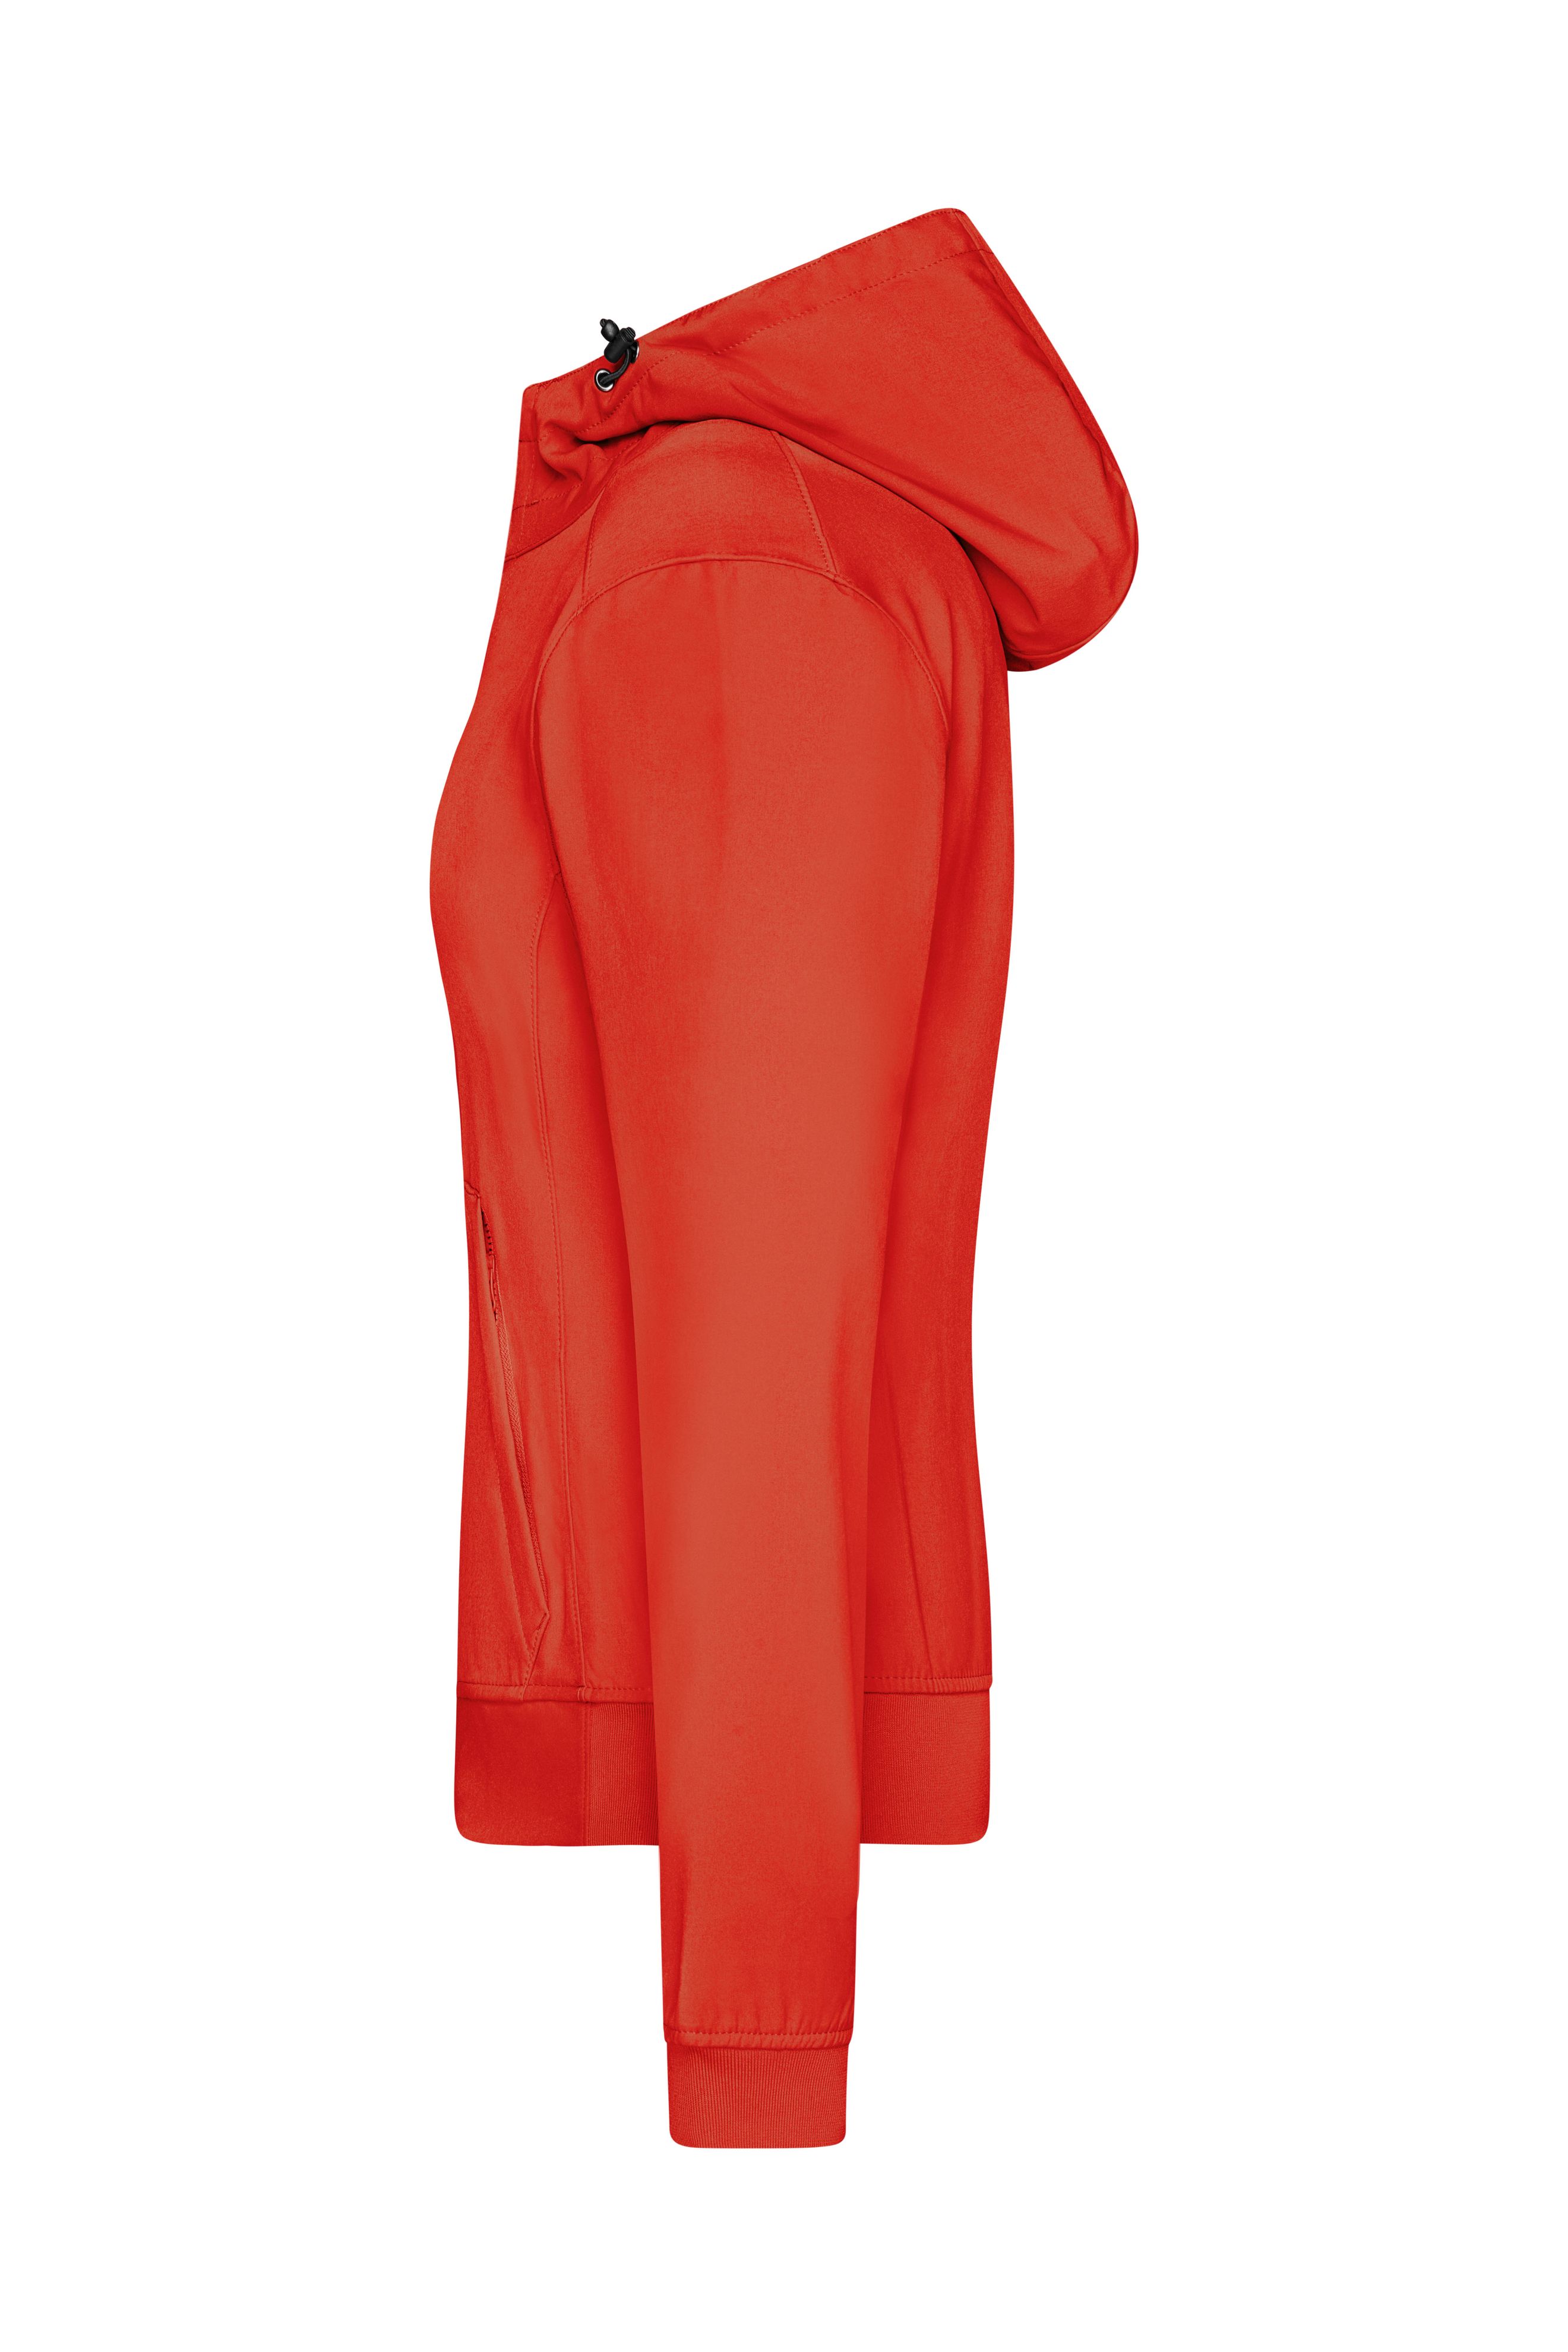 Ladies' Hooded Softshell Jacket JN1145 Softshelljacke mit Kapuze im sportlichen Design